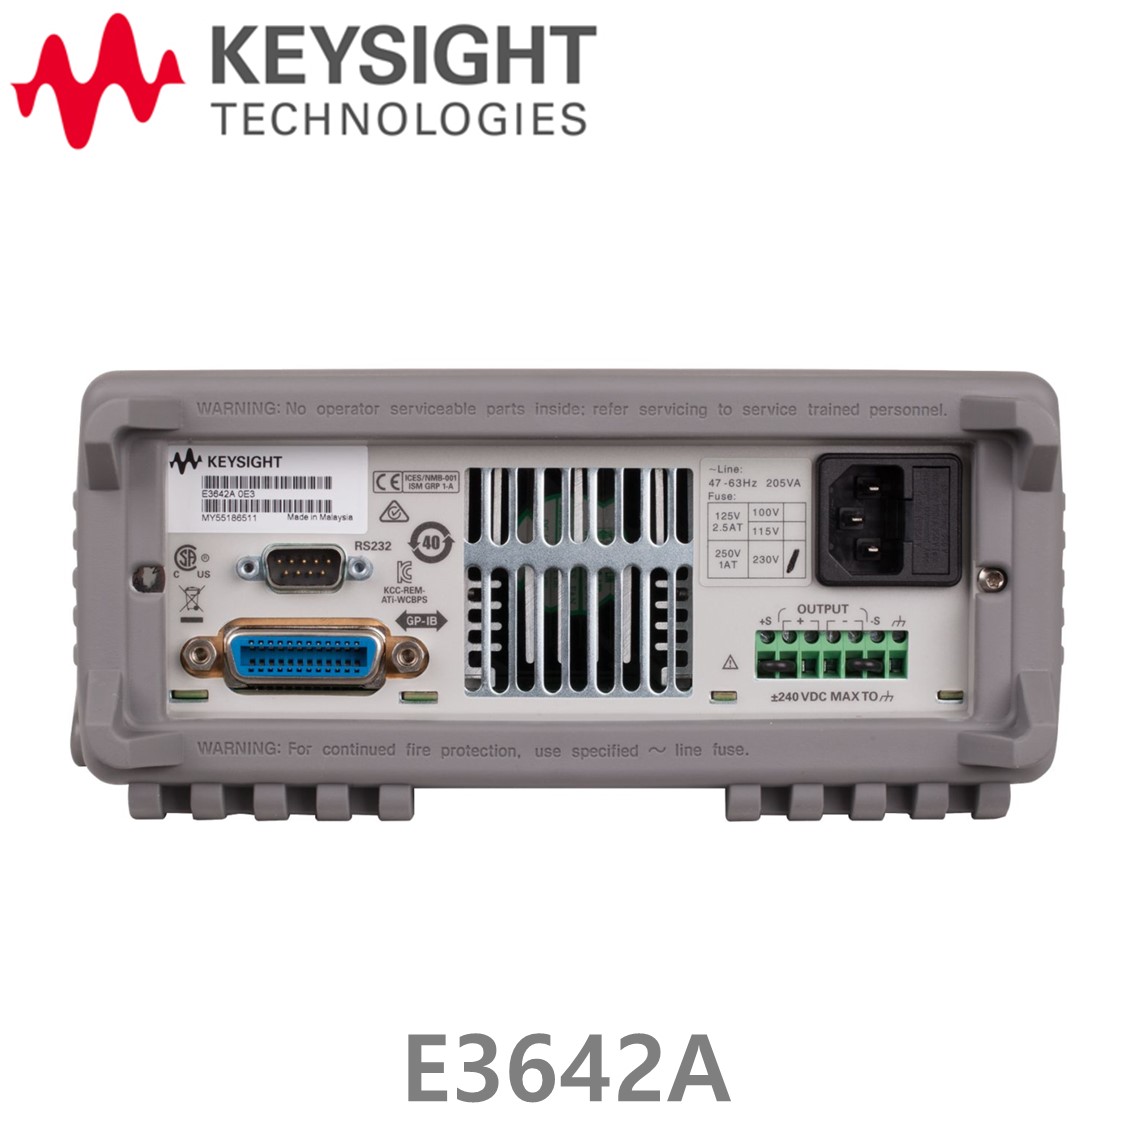 [ KEYSIGHT E3642A ] 키사이트 DC파워서플라이 50W 8V/5A or 20V/2.5A, DC전원공급기